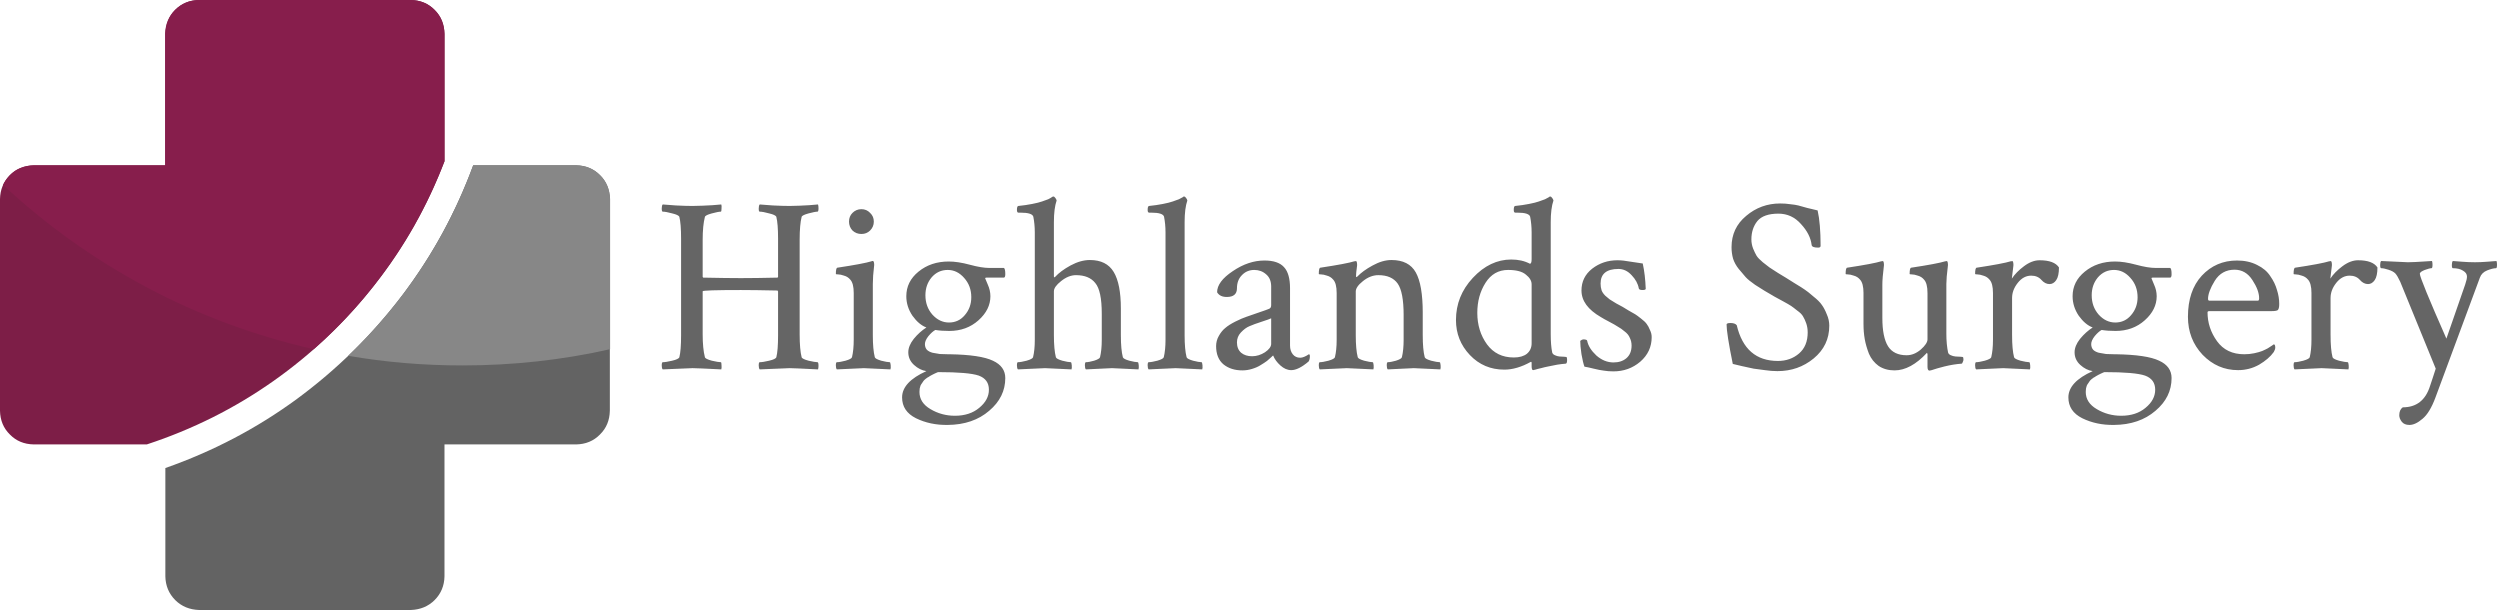 Highlands Surgery logo